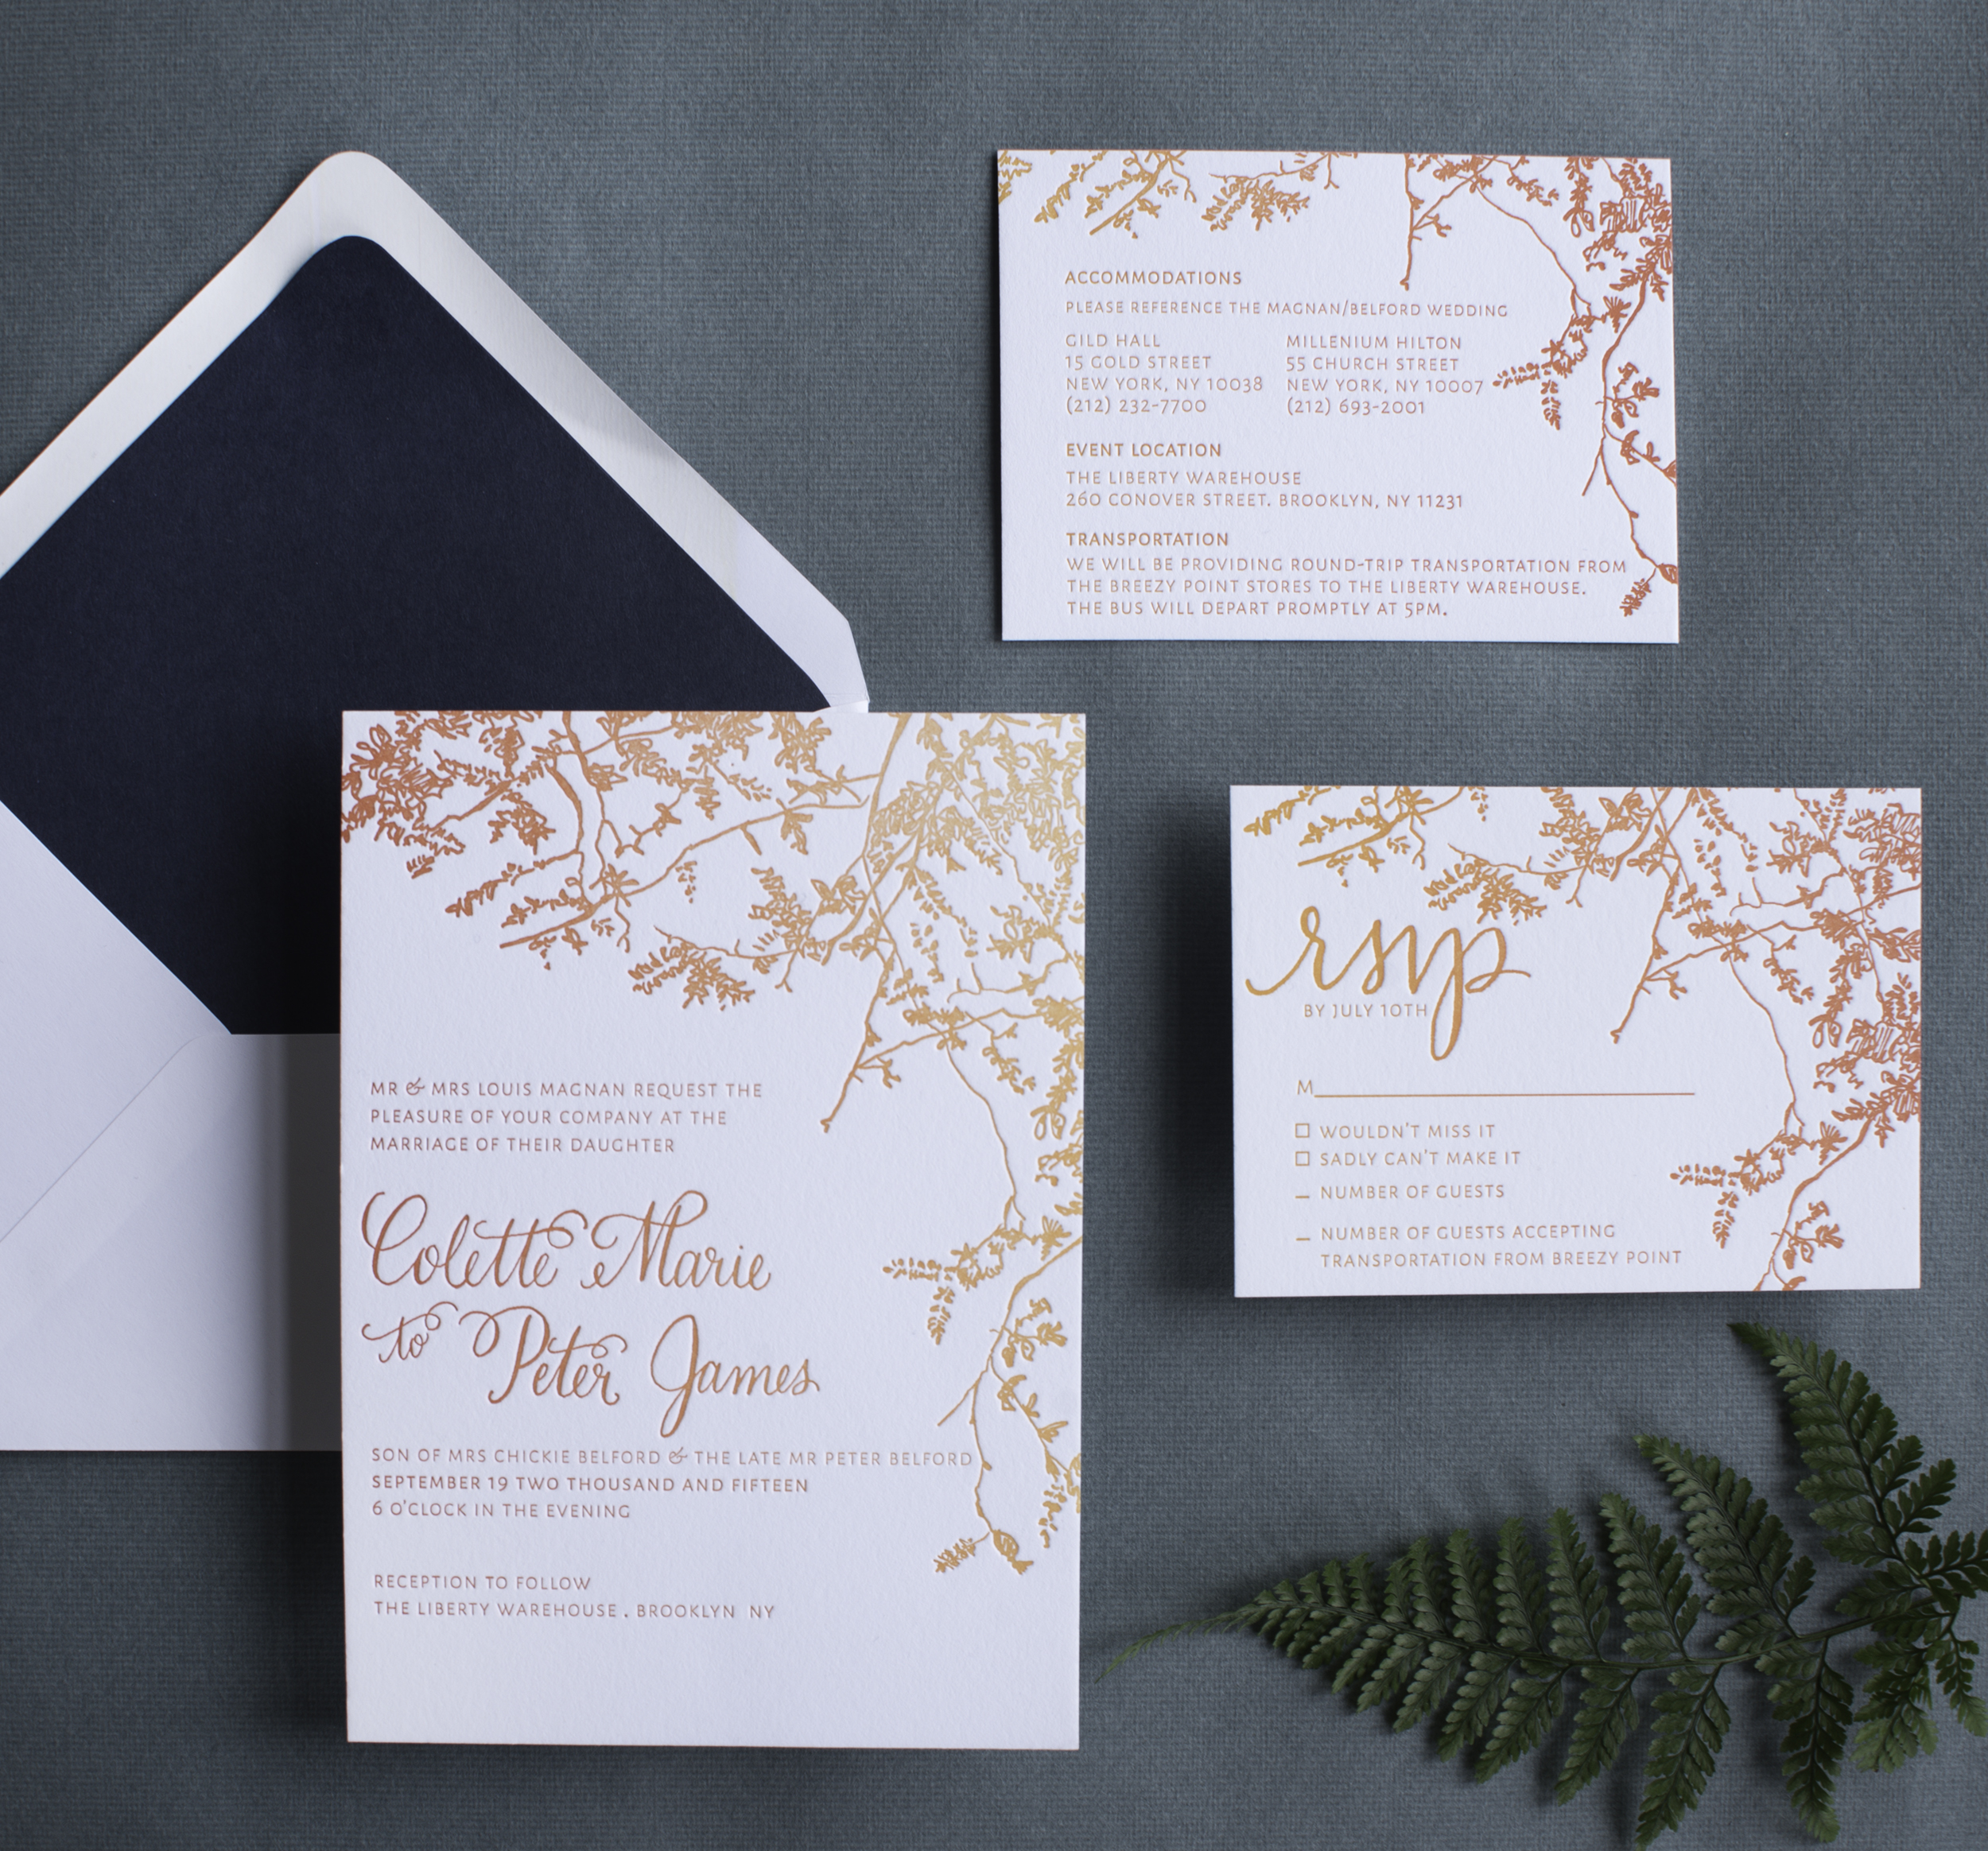 Autumn Ombré Letterpress Wedding Invitations by Al Stampa